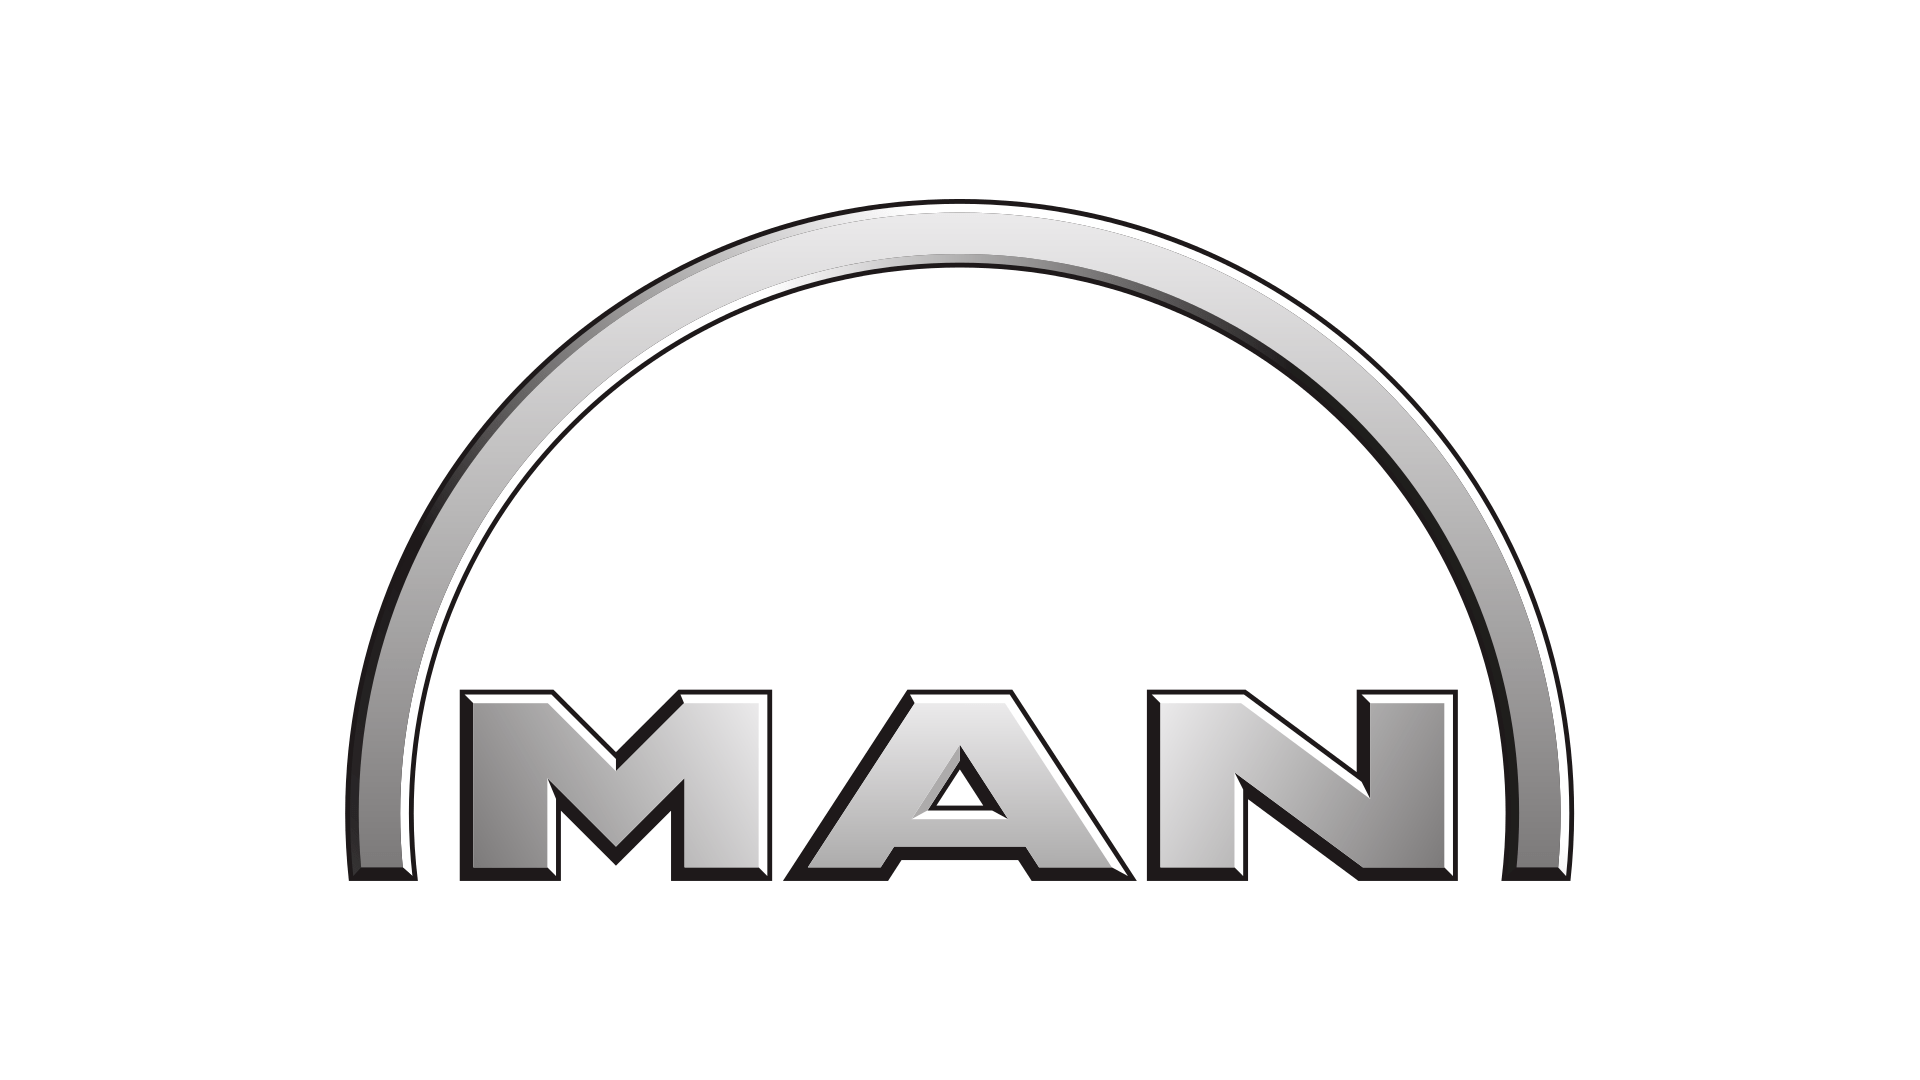 MAN-logo-1920x1080-min